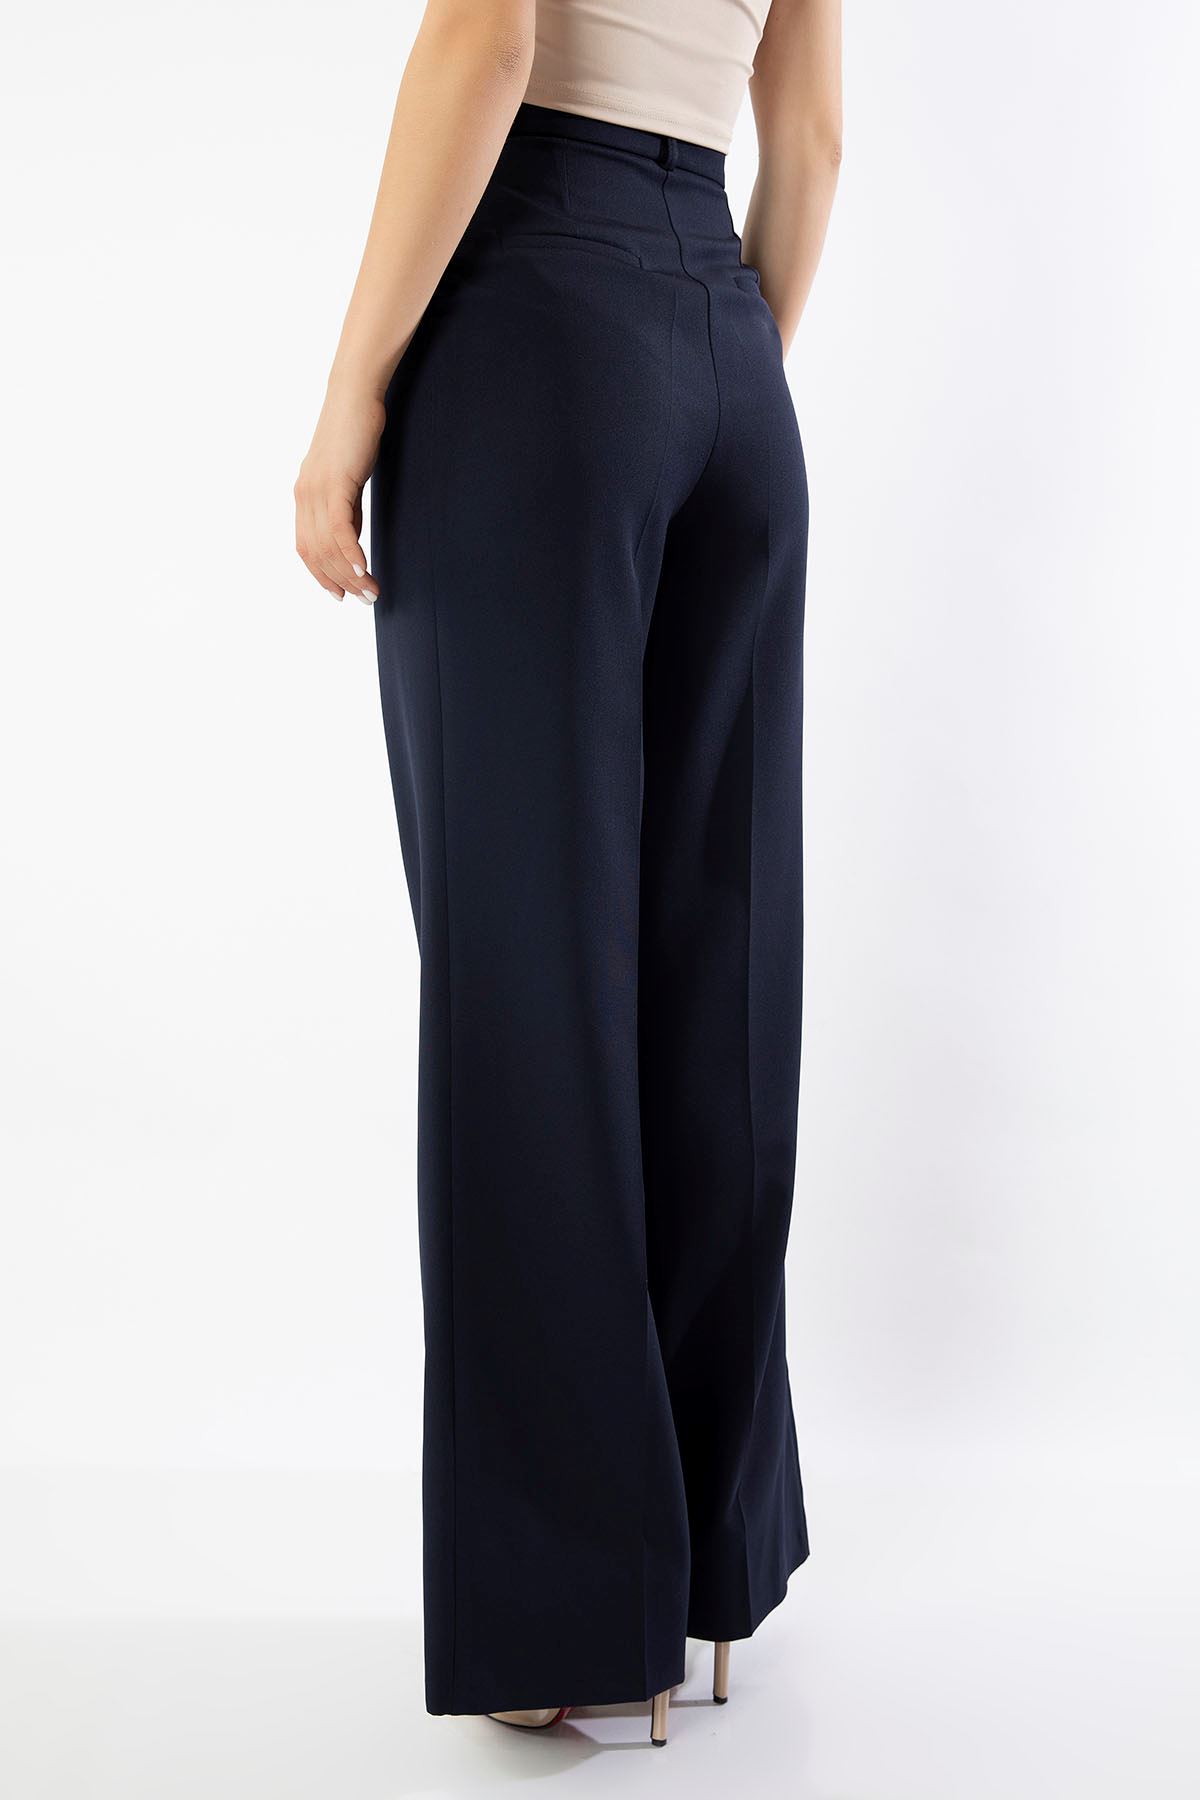 Atlas Fabric Maxi Wide Palazzo Women'S Trouser - Navy Blue 